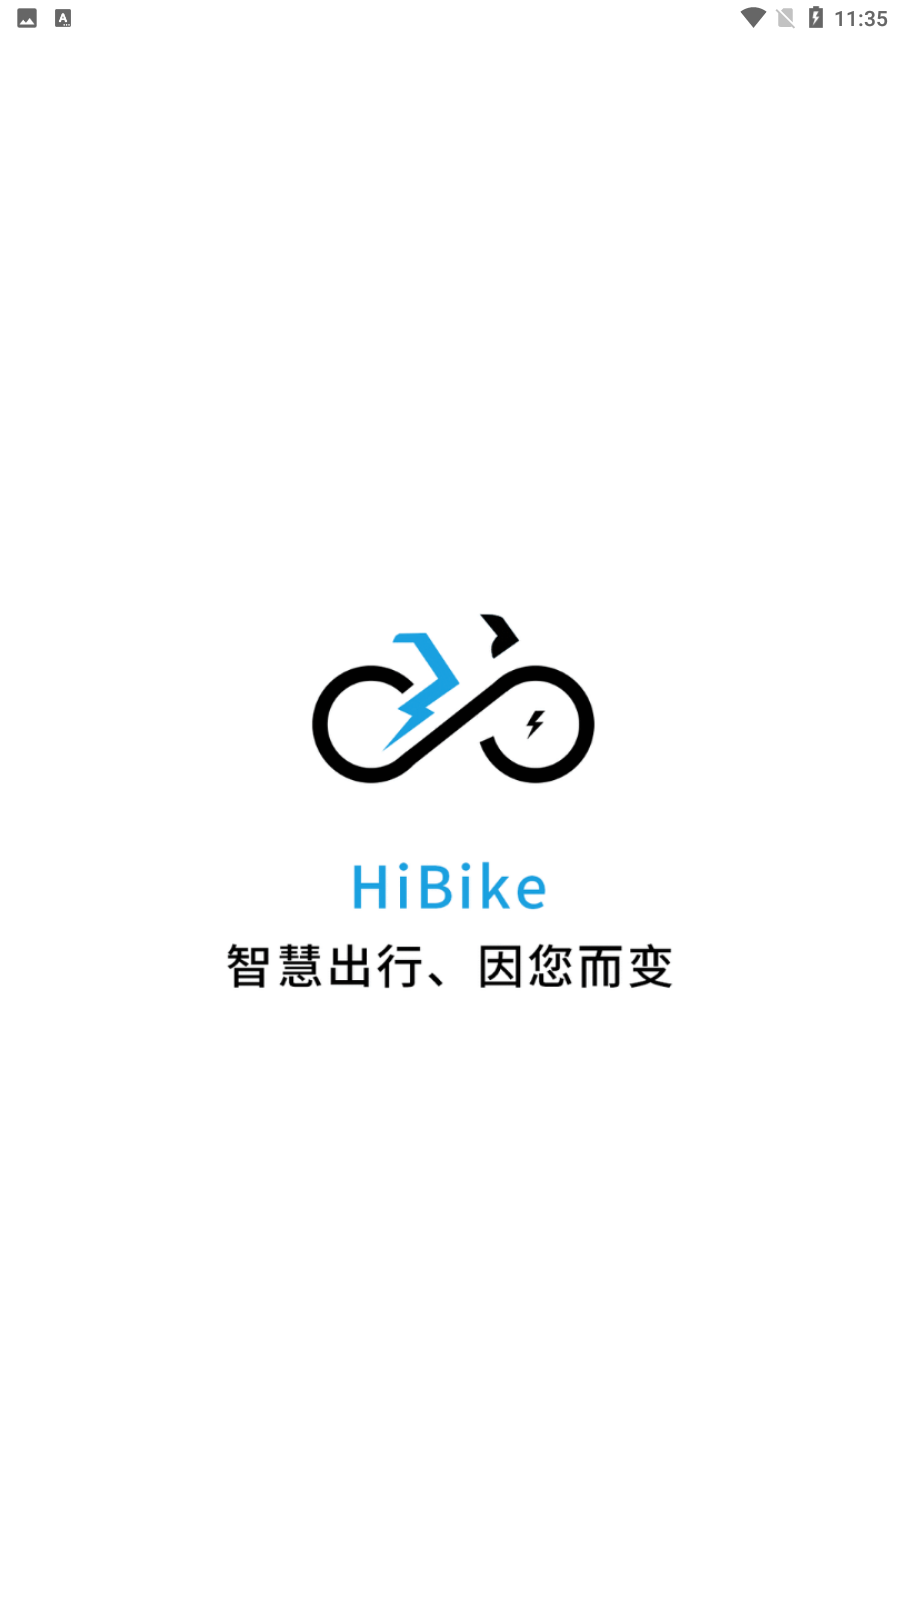 hibike官网v1.0.5